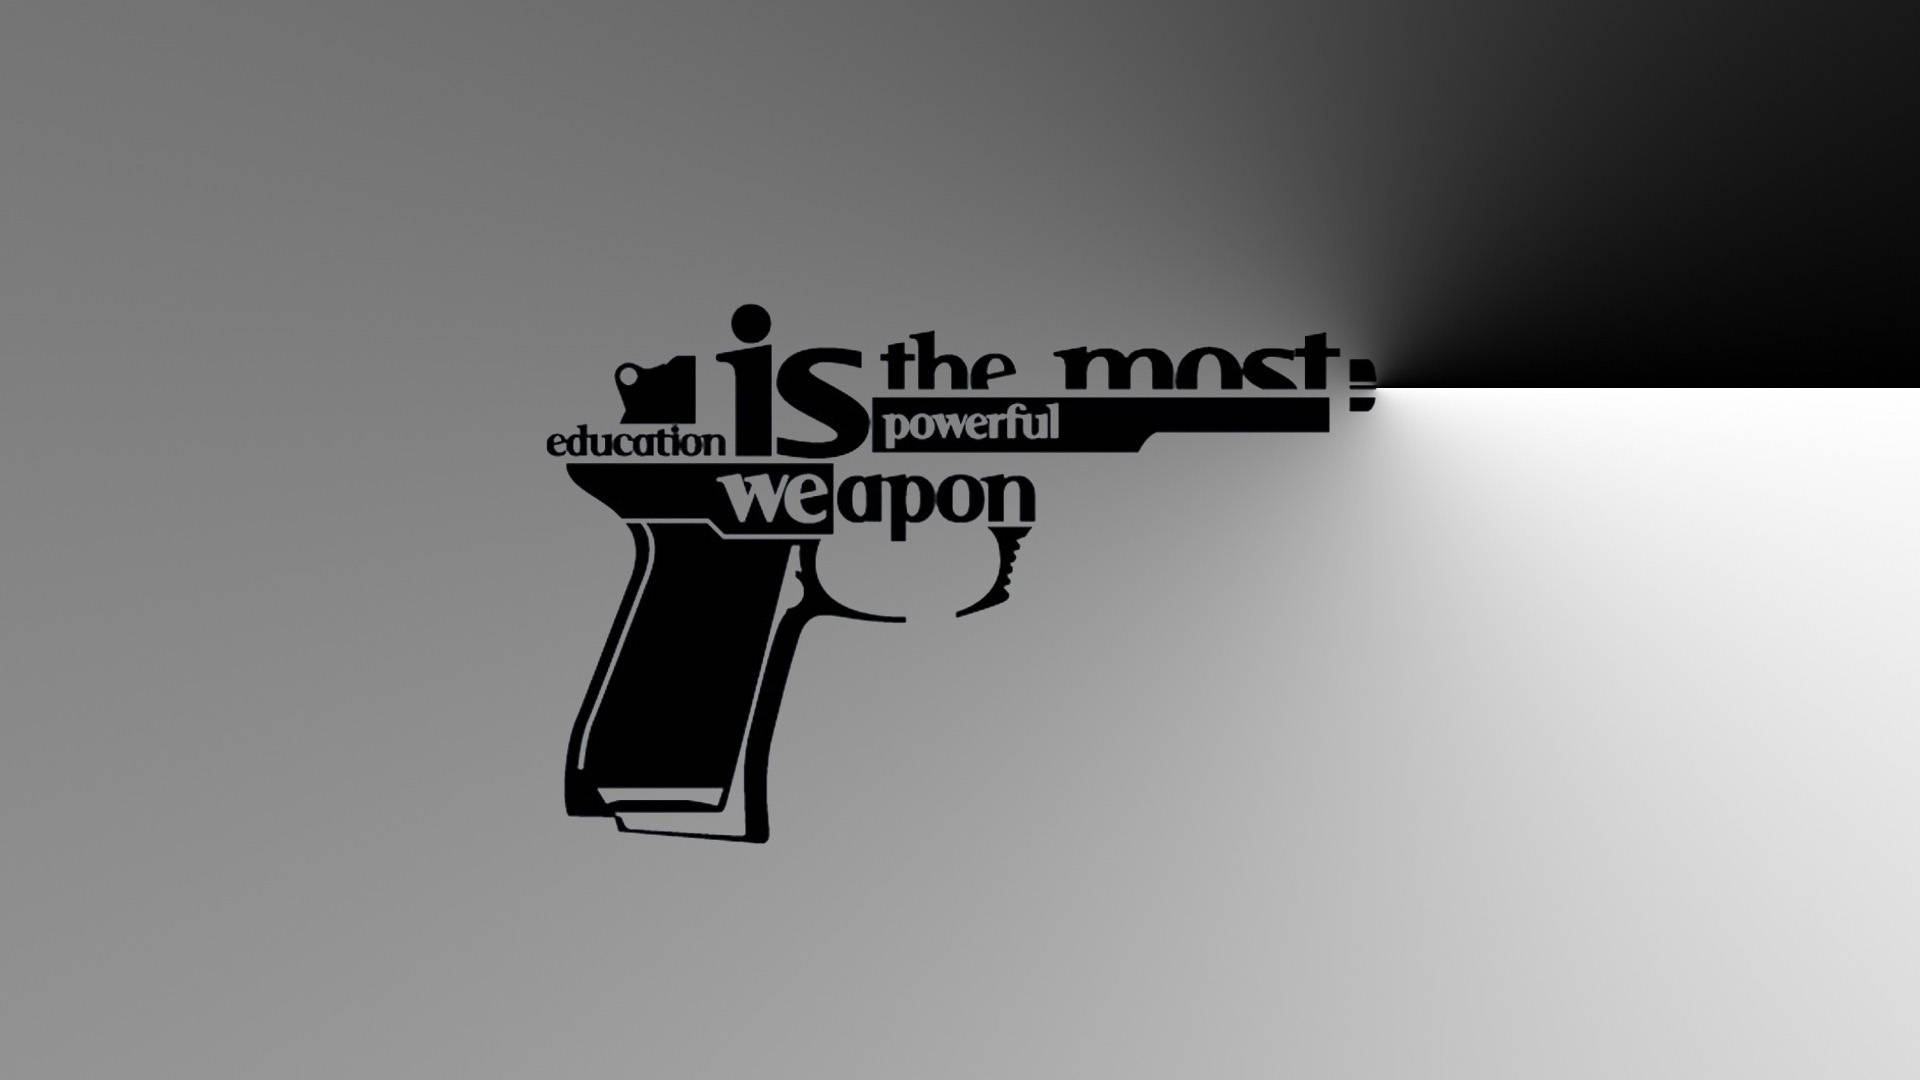 Educational Weapon Symbol Background